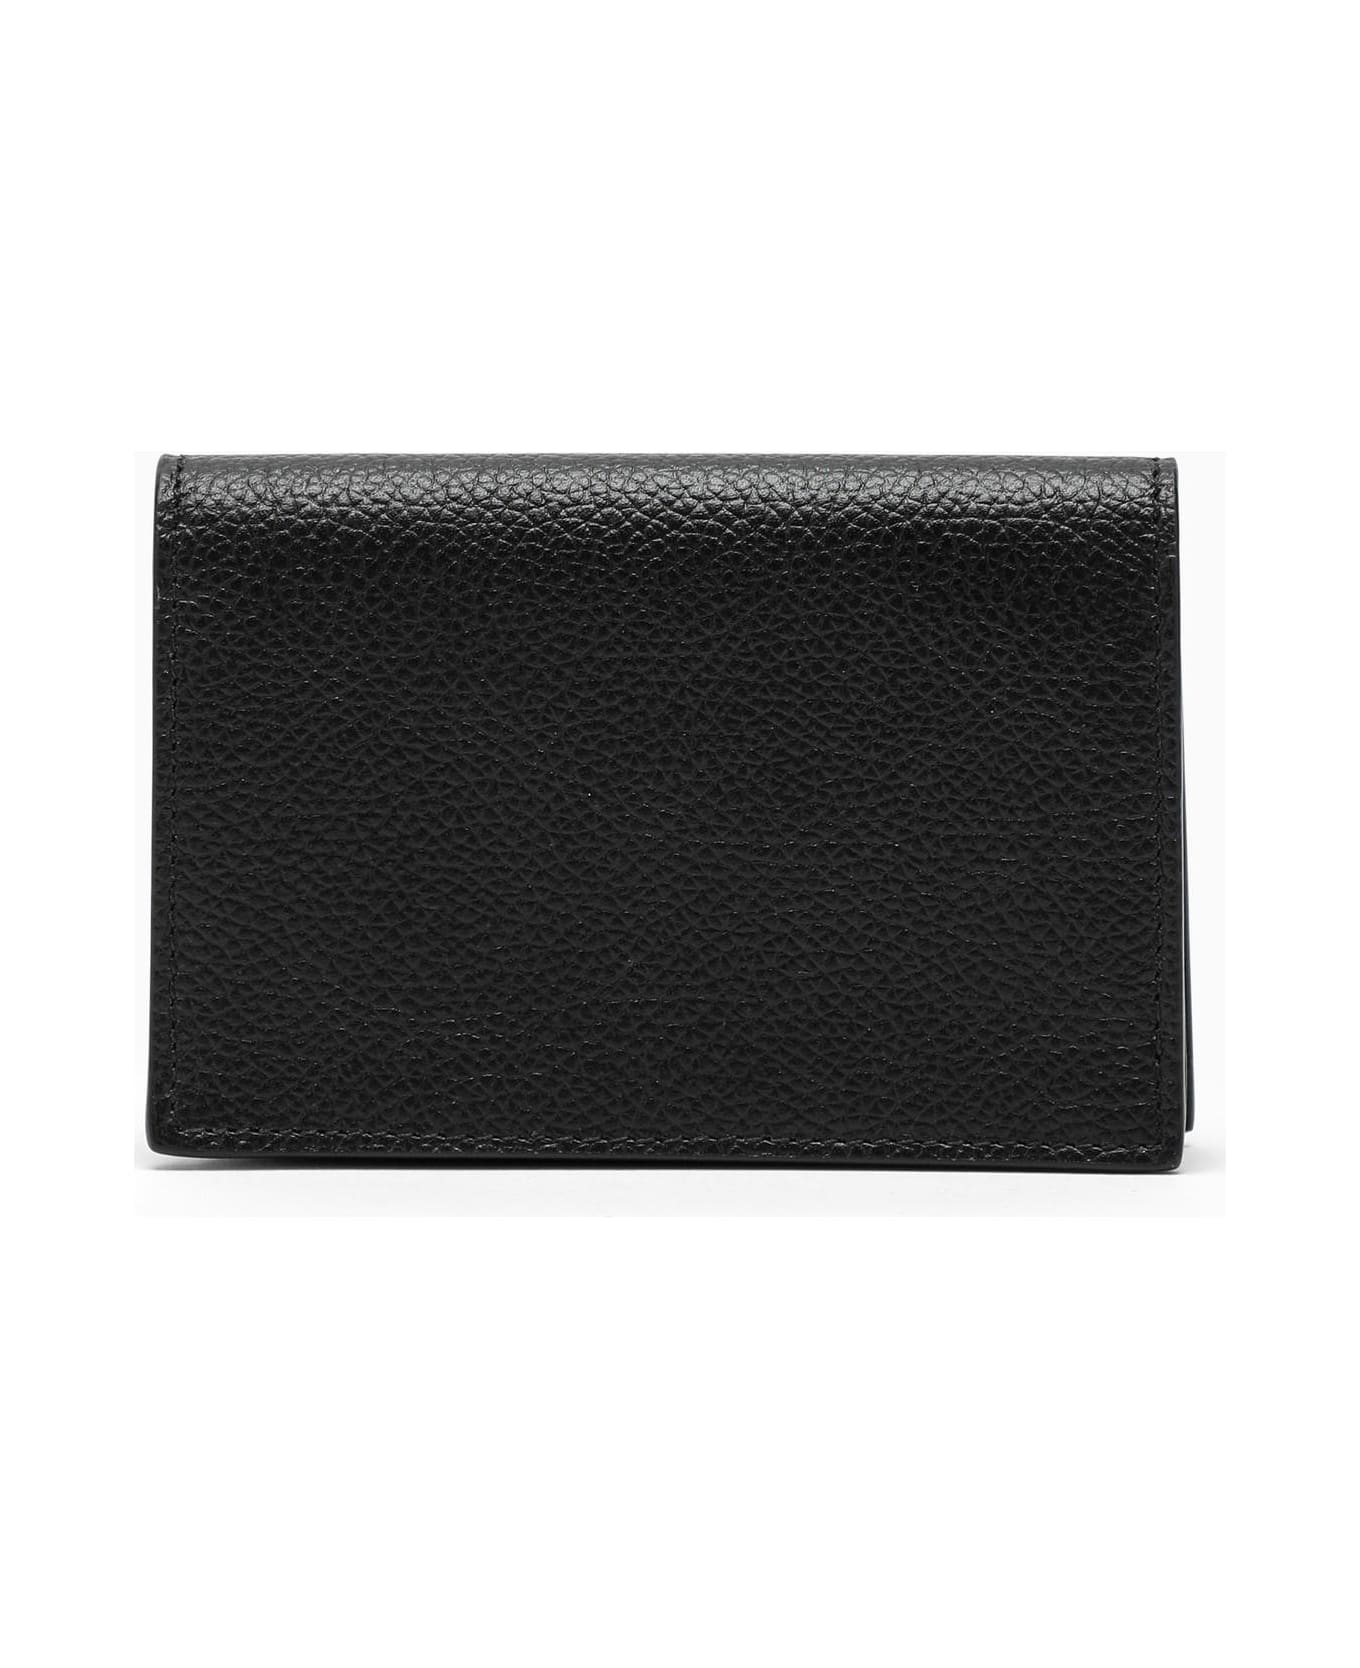 Balenciaga Black Grained Leather Card Case - Black